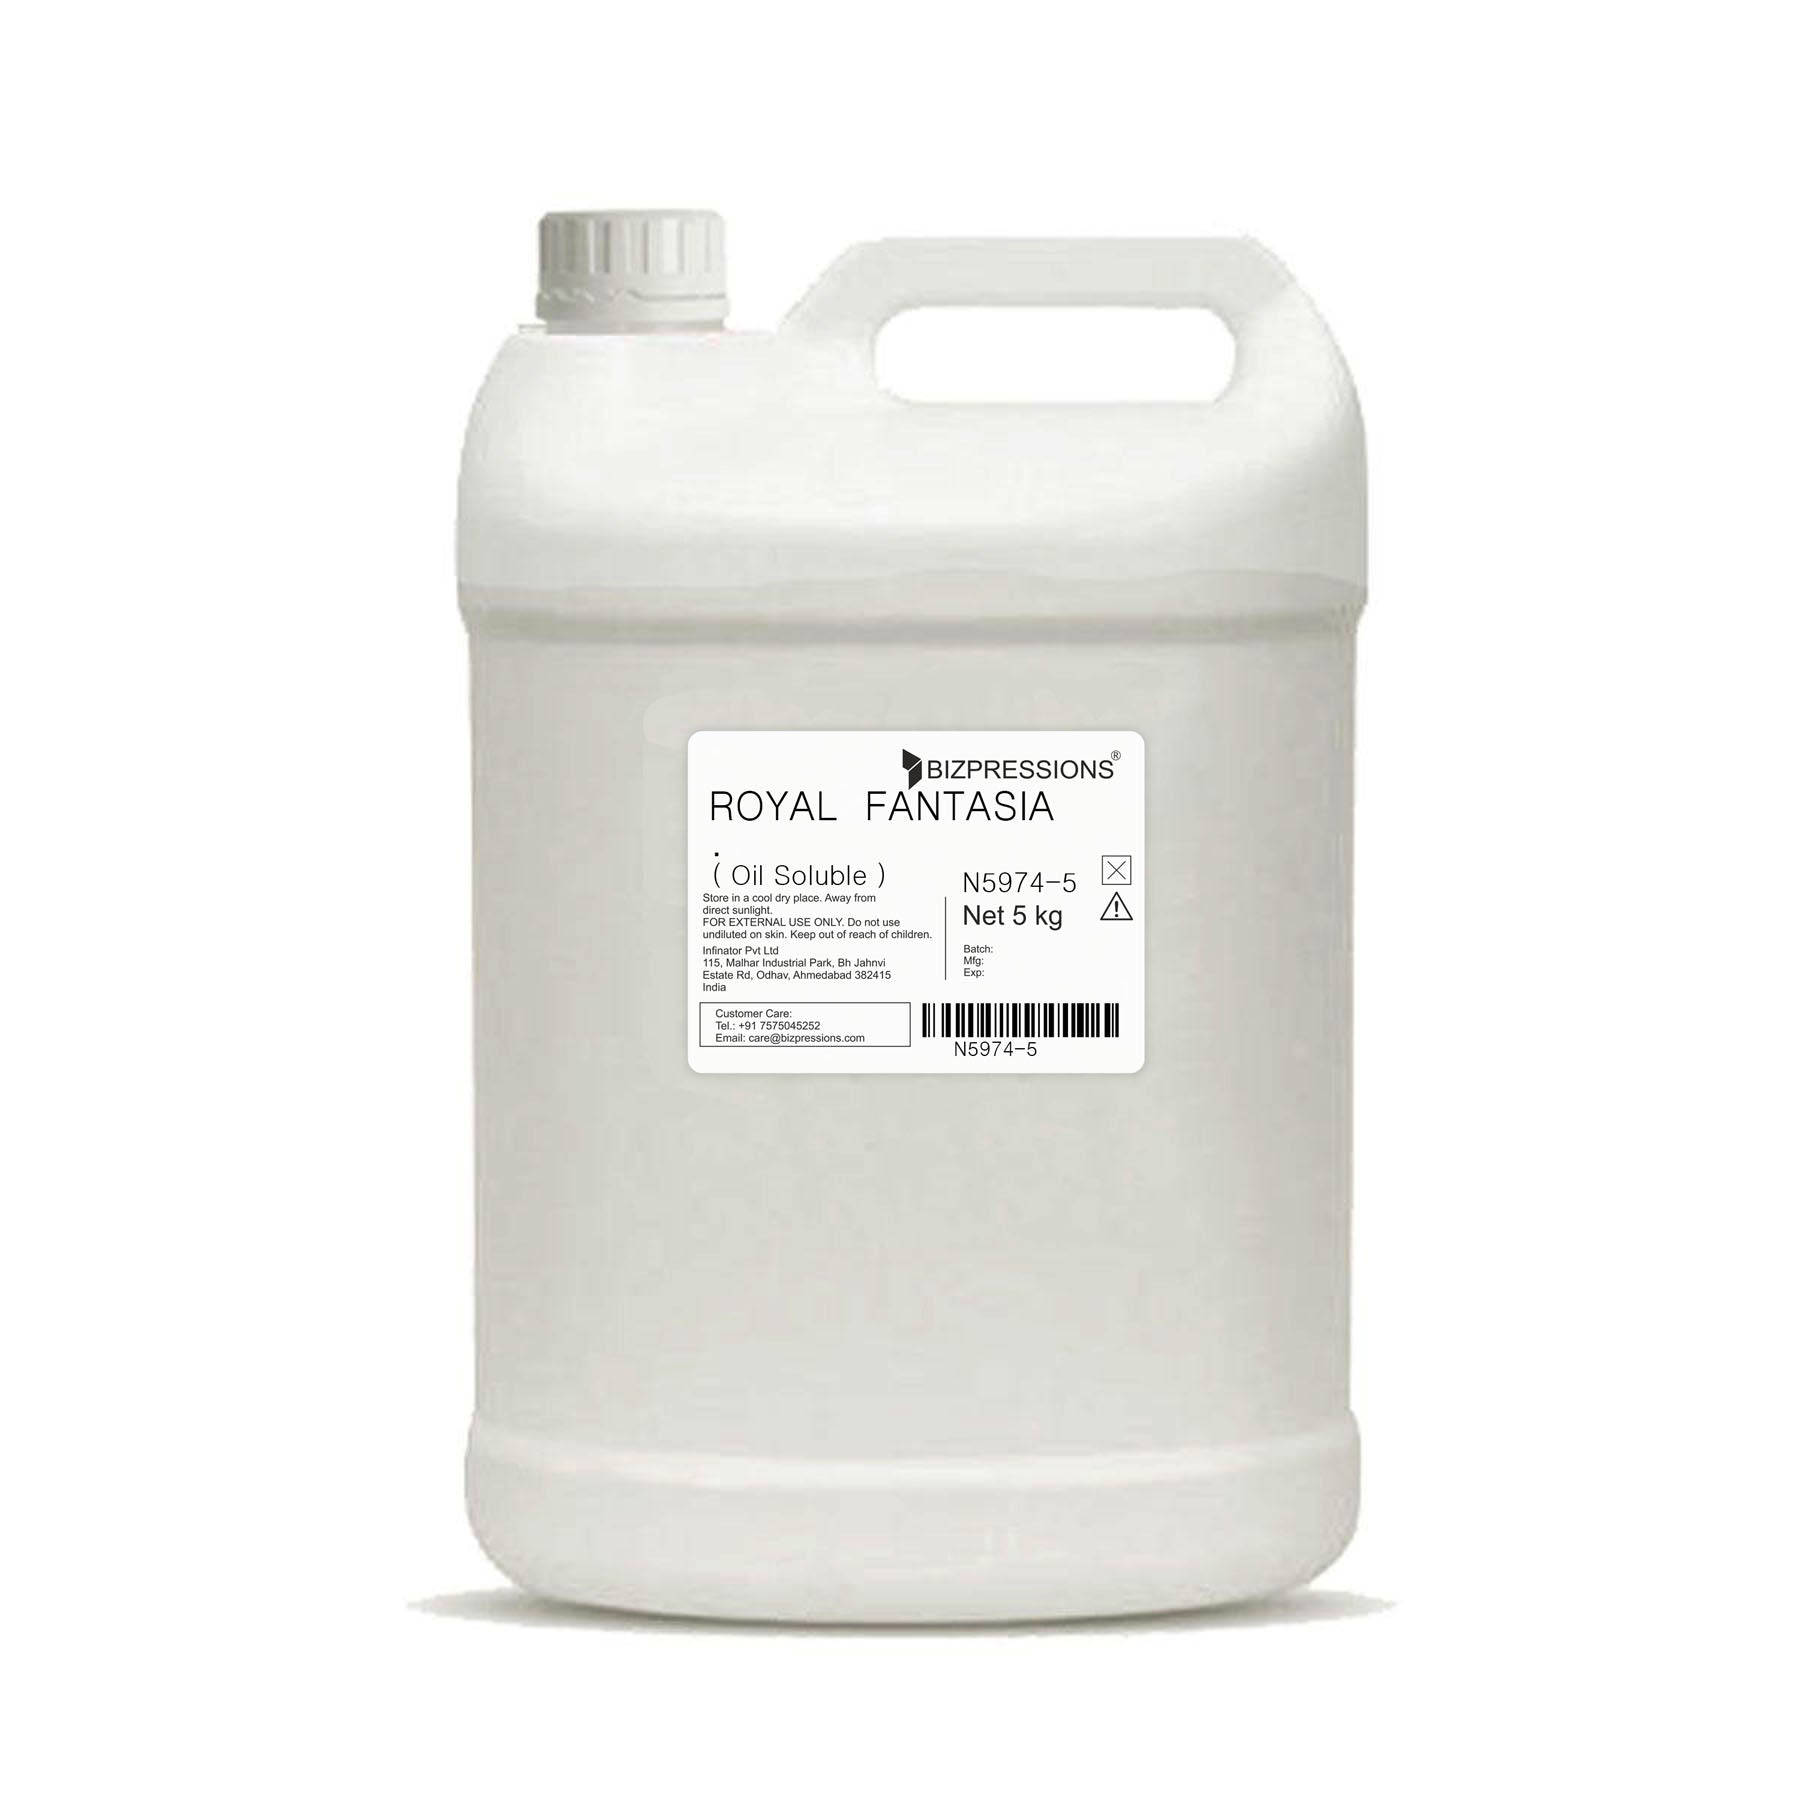 ROYAL FANTASIA - Fragrance ( Oil Soluble ) - 5 kg